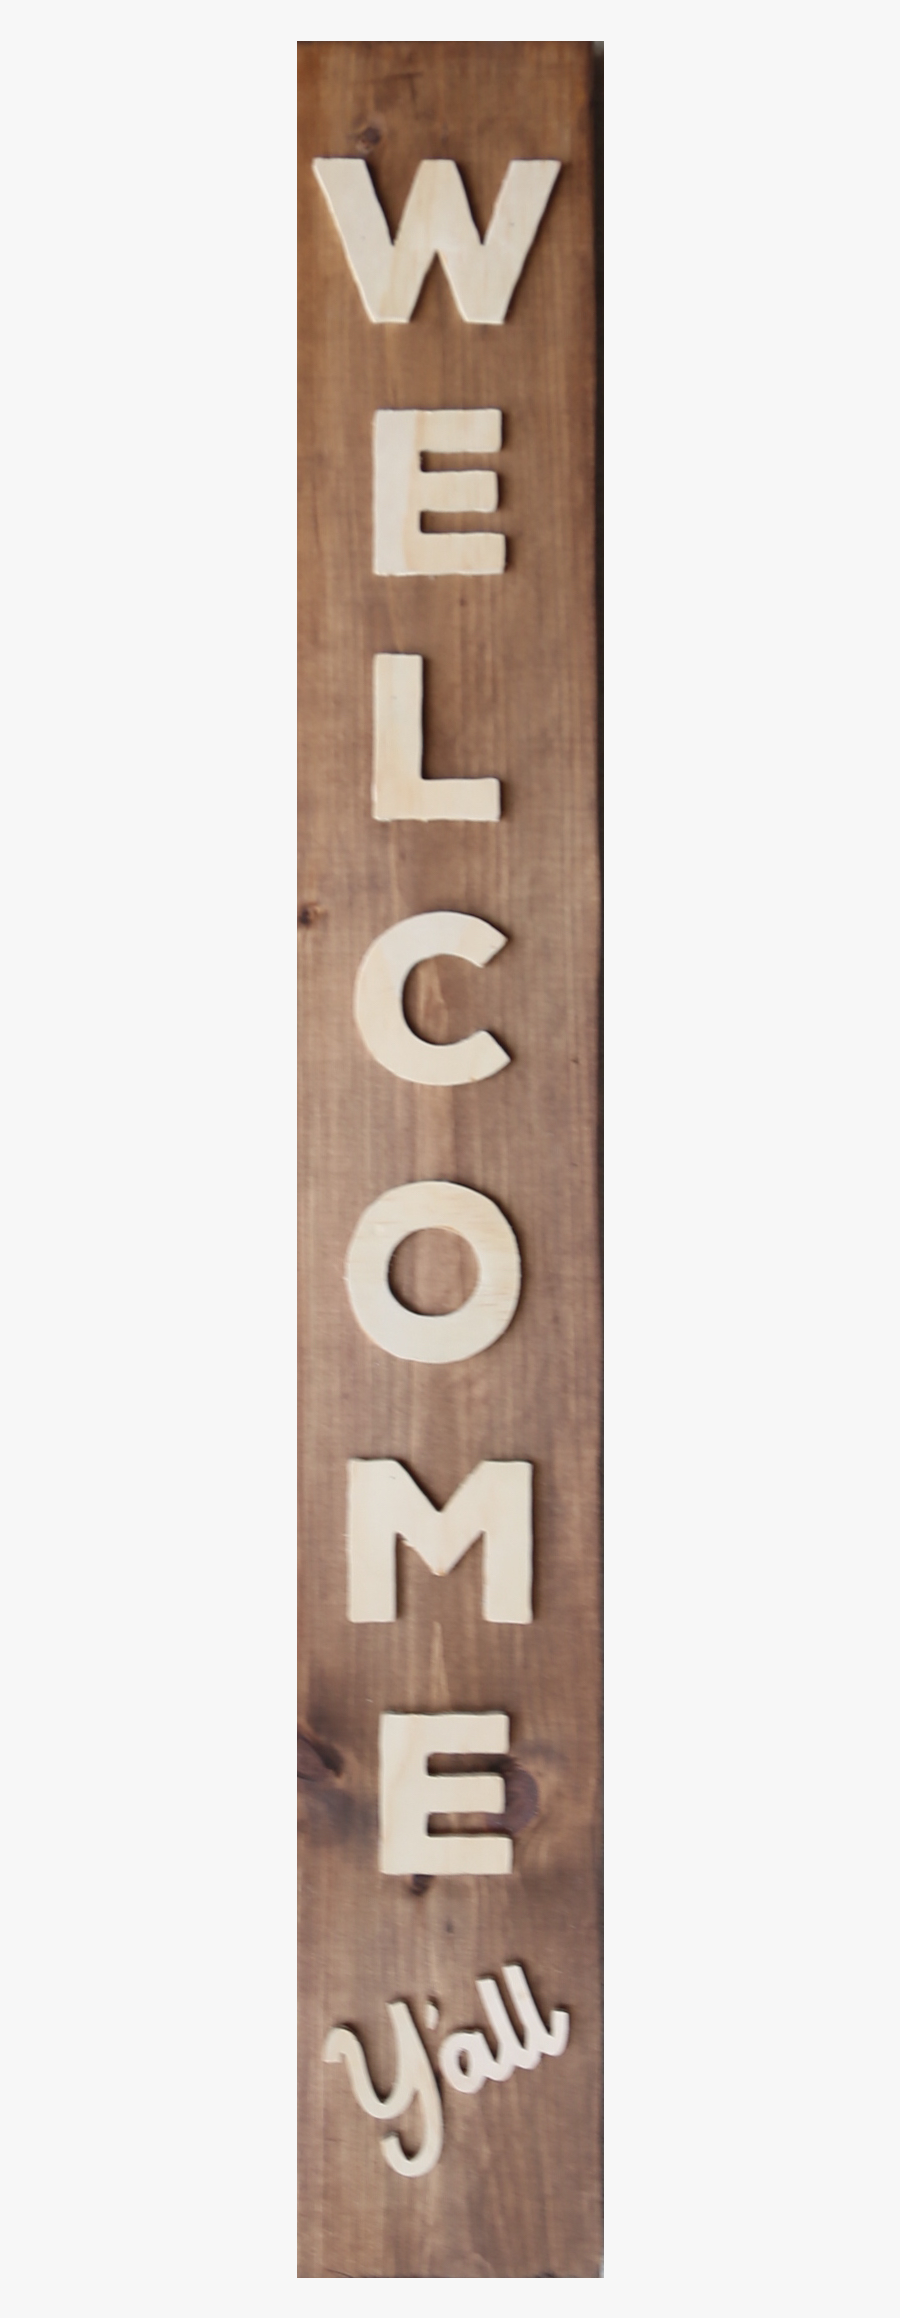 Hanging Wood Sign Png, Transparent Clipart